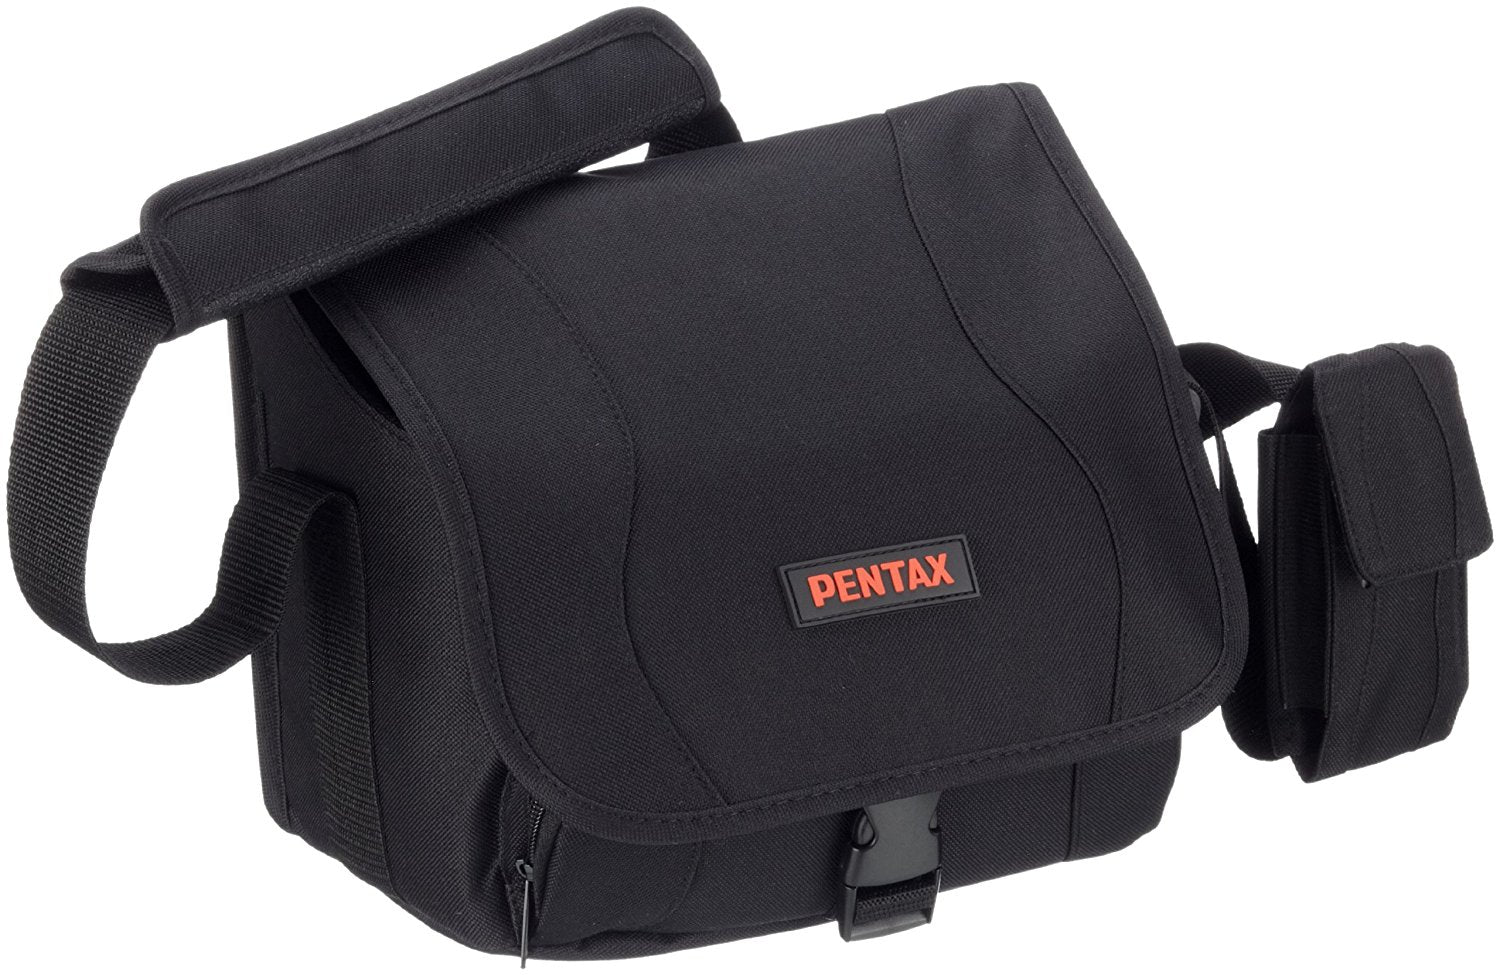 Pentax SLR Camera Bag